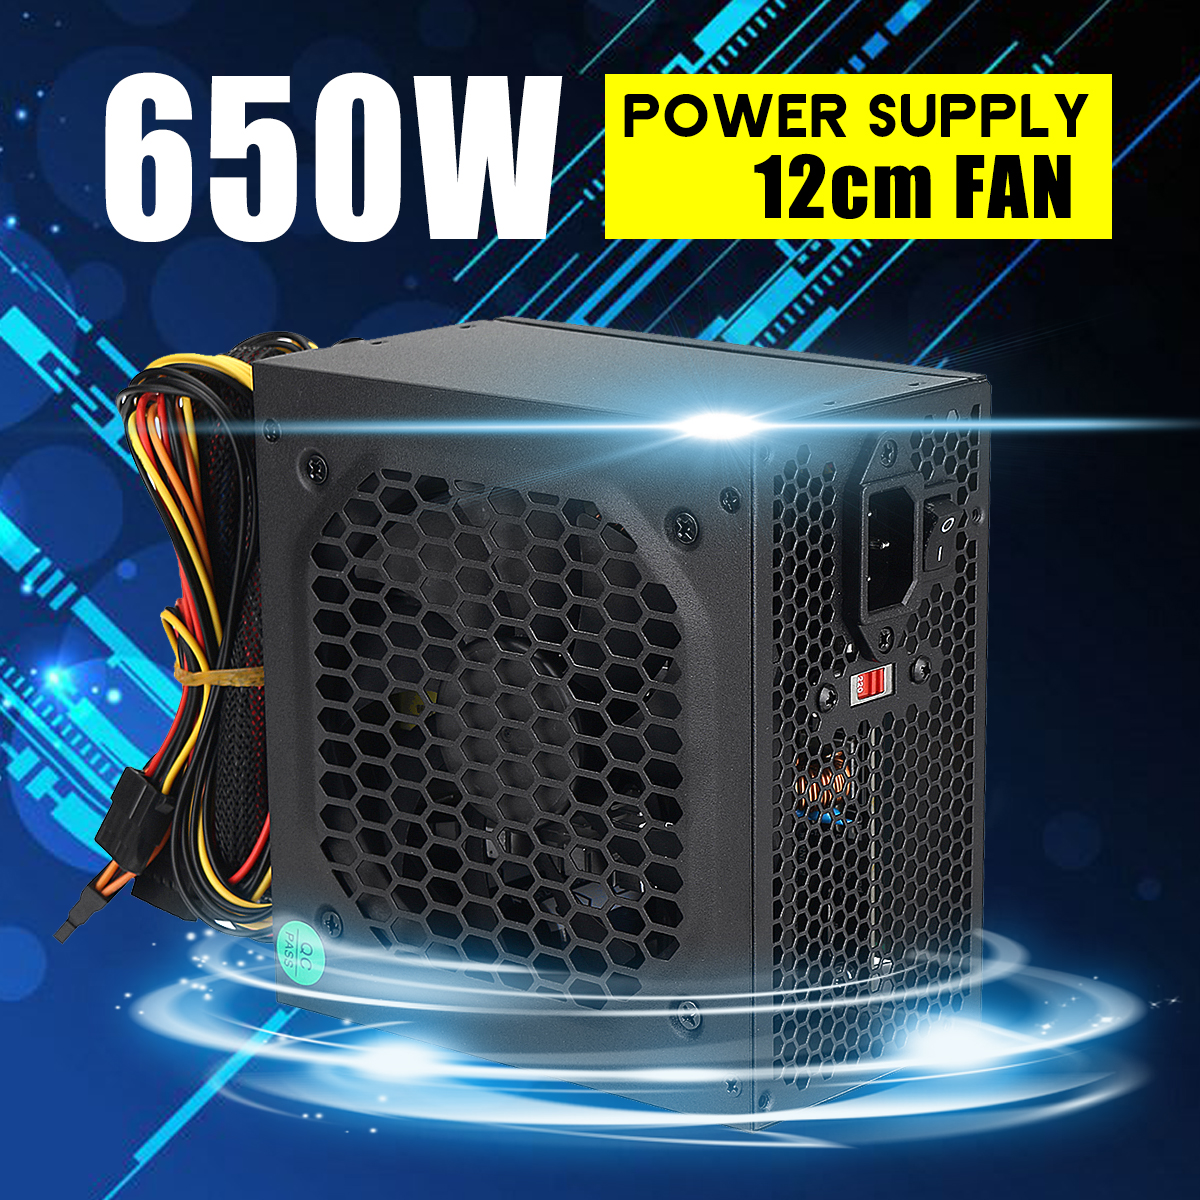 650W-Power-Supply-12cm-Fan-8-Pin-PCI-SATA-12V-Computer-Power-Supply-1709941-1